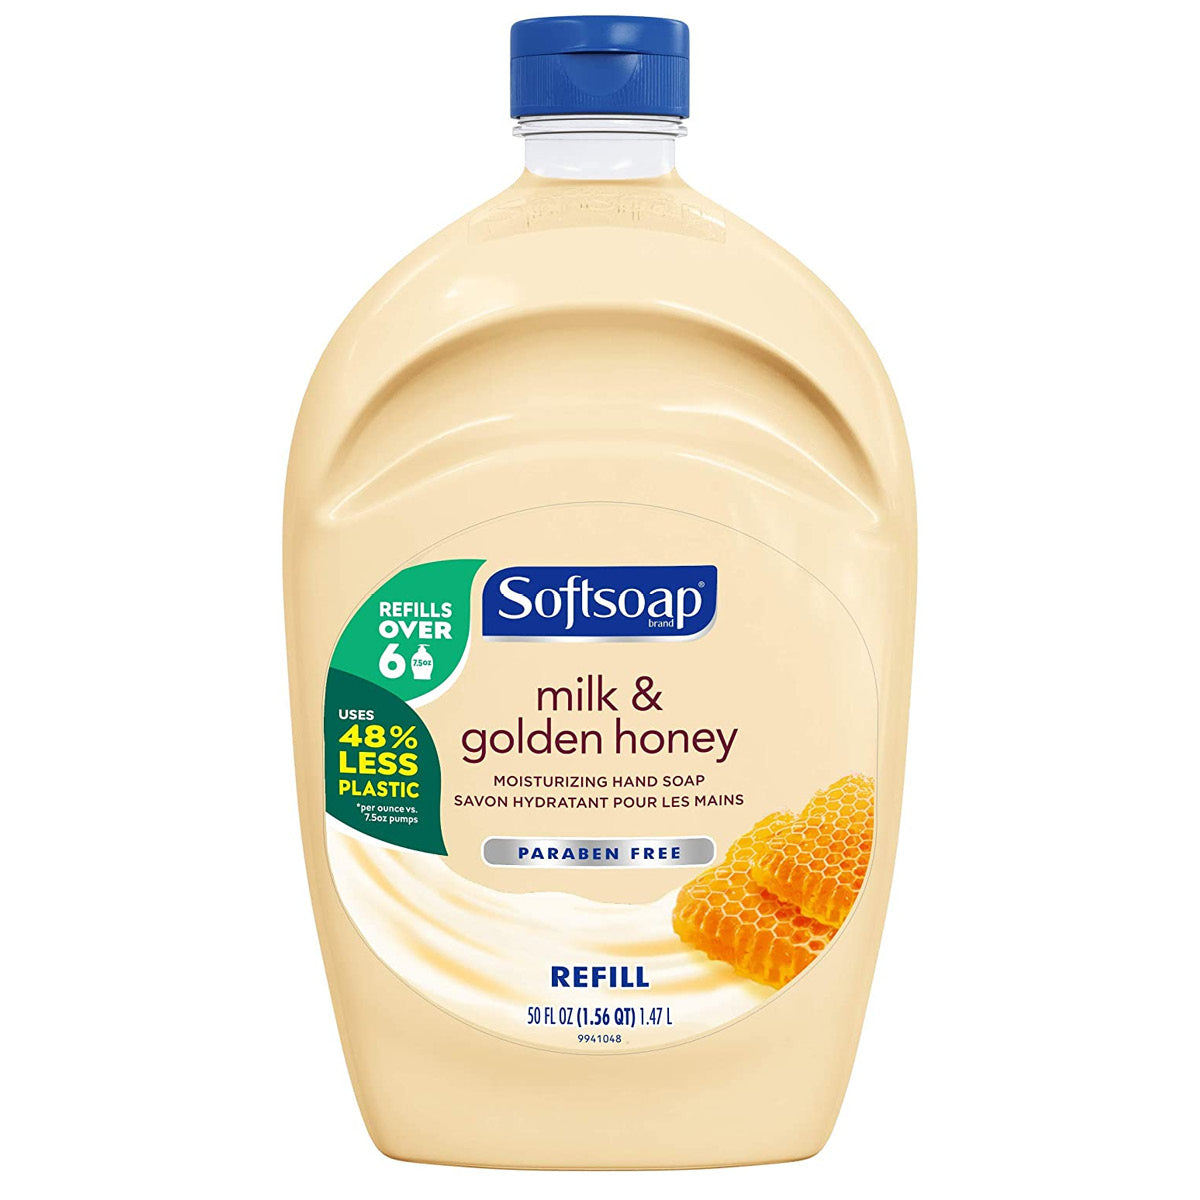 Softsoap Hand Soap Refill, Milk & Golden Honey, 1.47 L